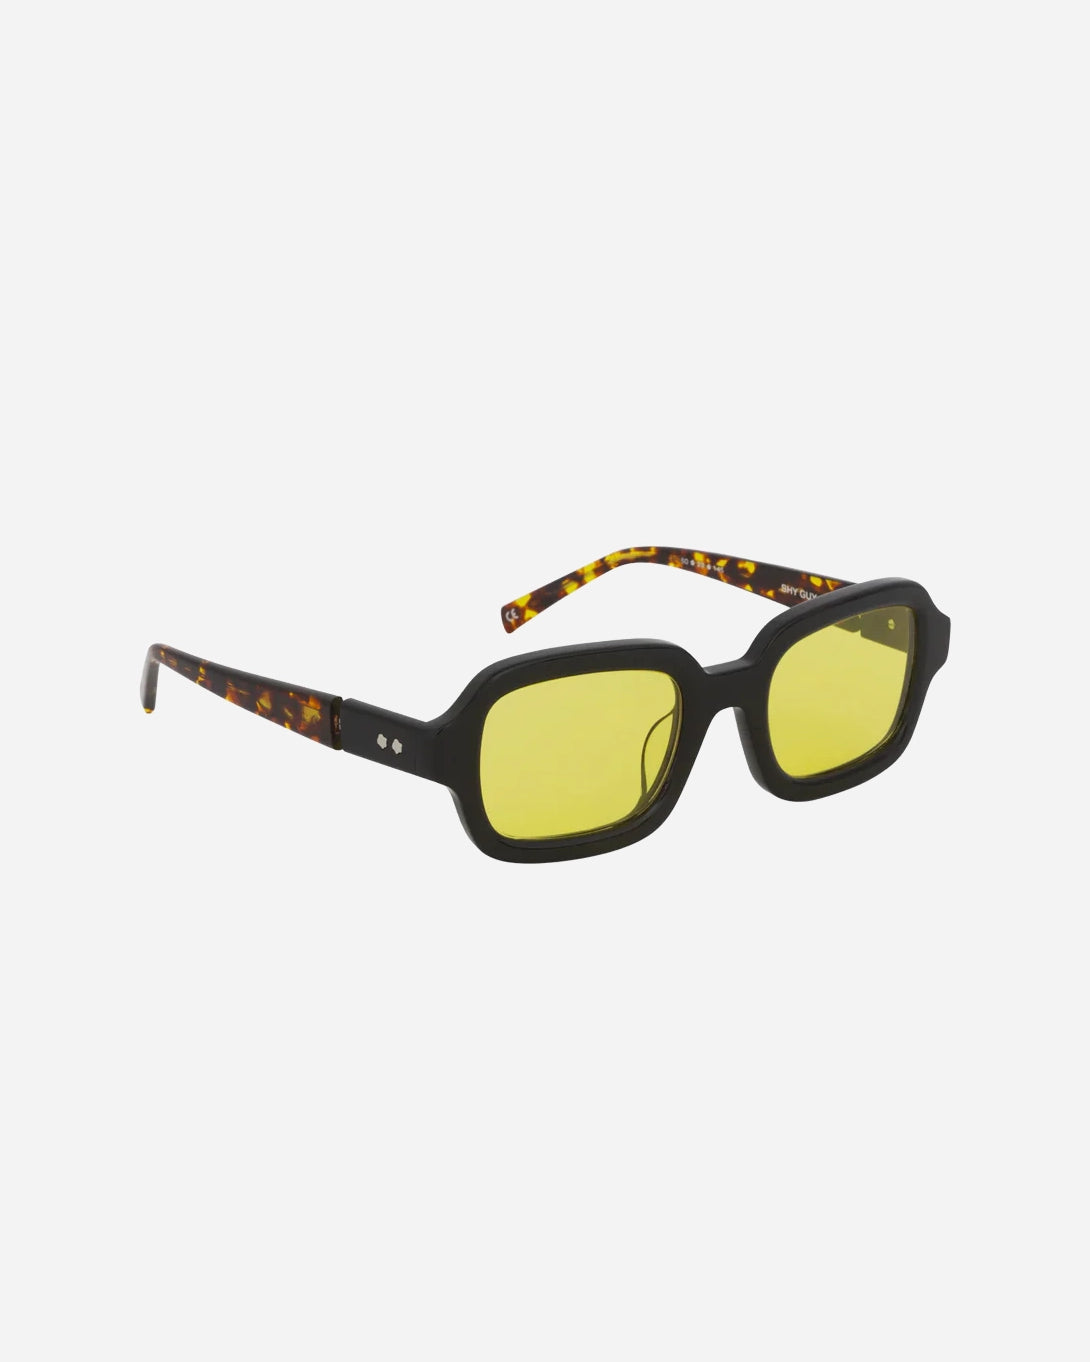 Black/Yellow Tint Shy Guy Bonnie Clyde Sunglasses